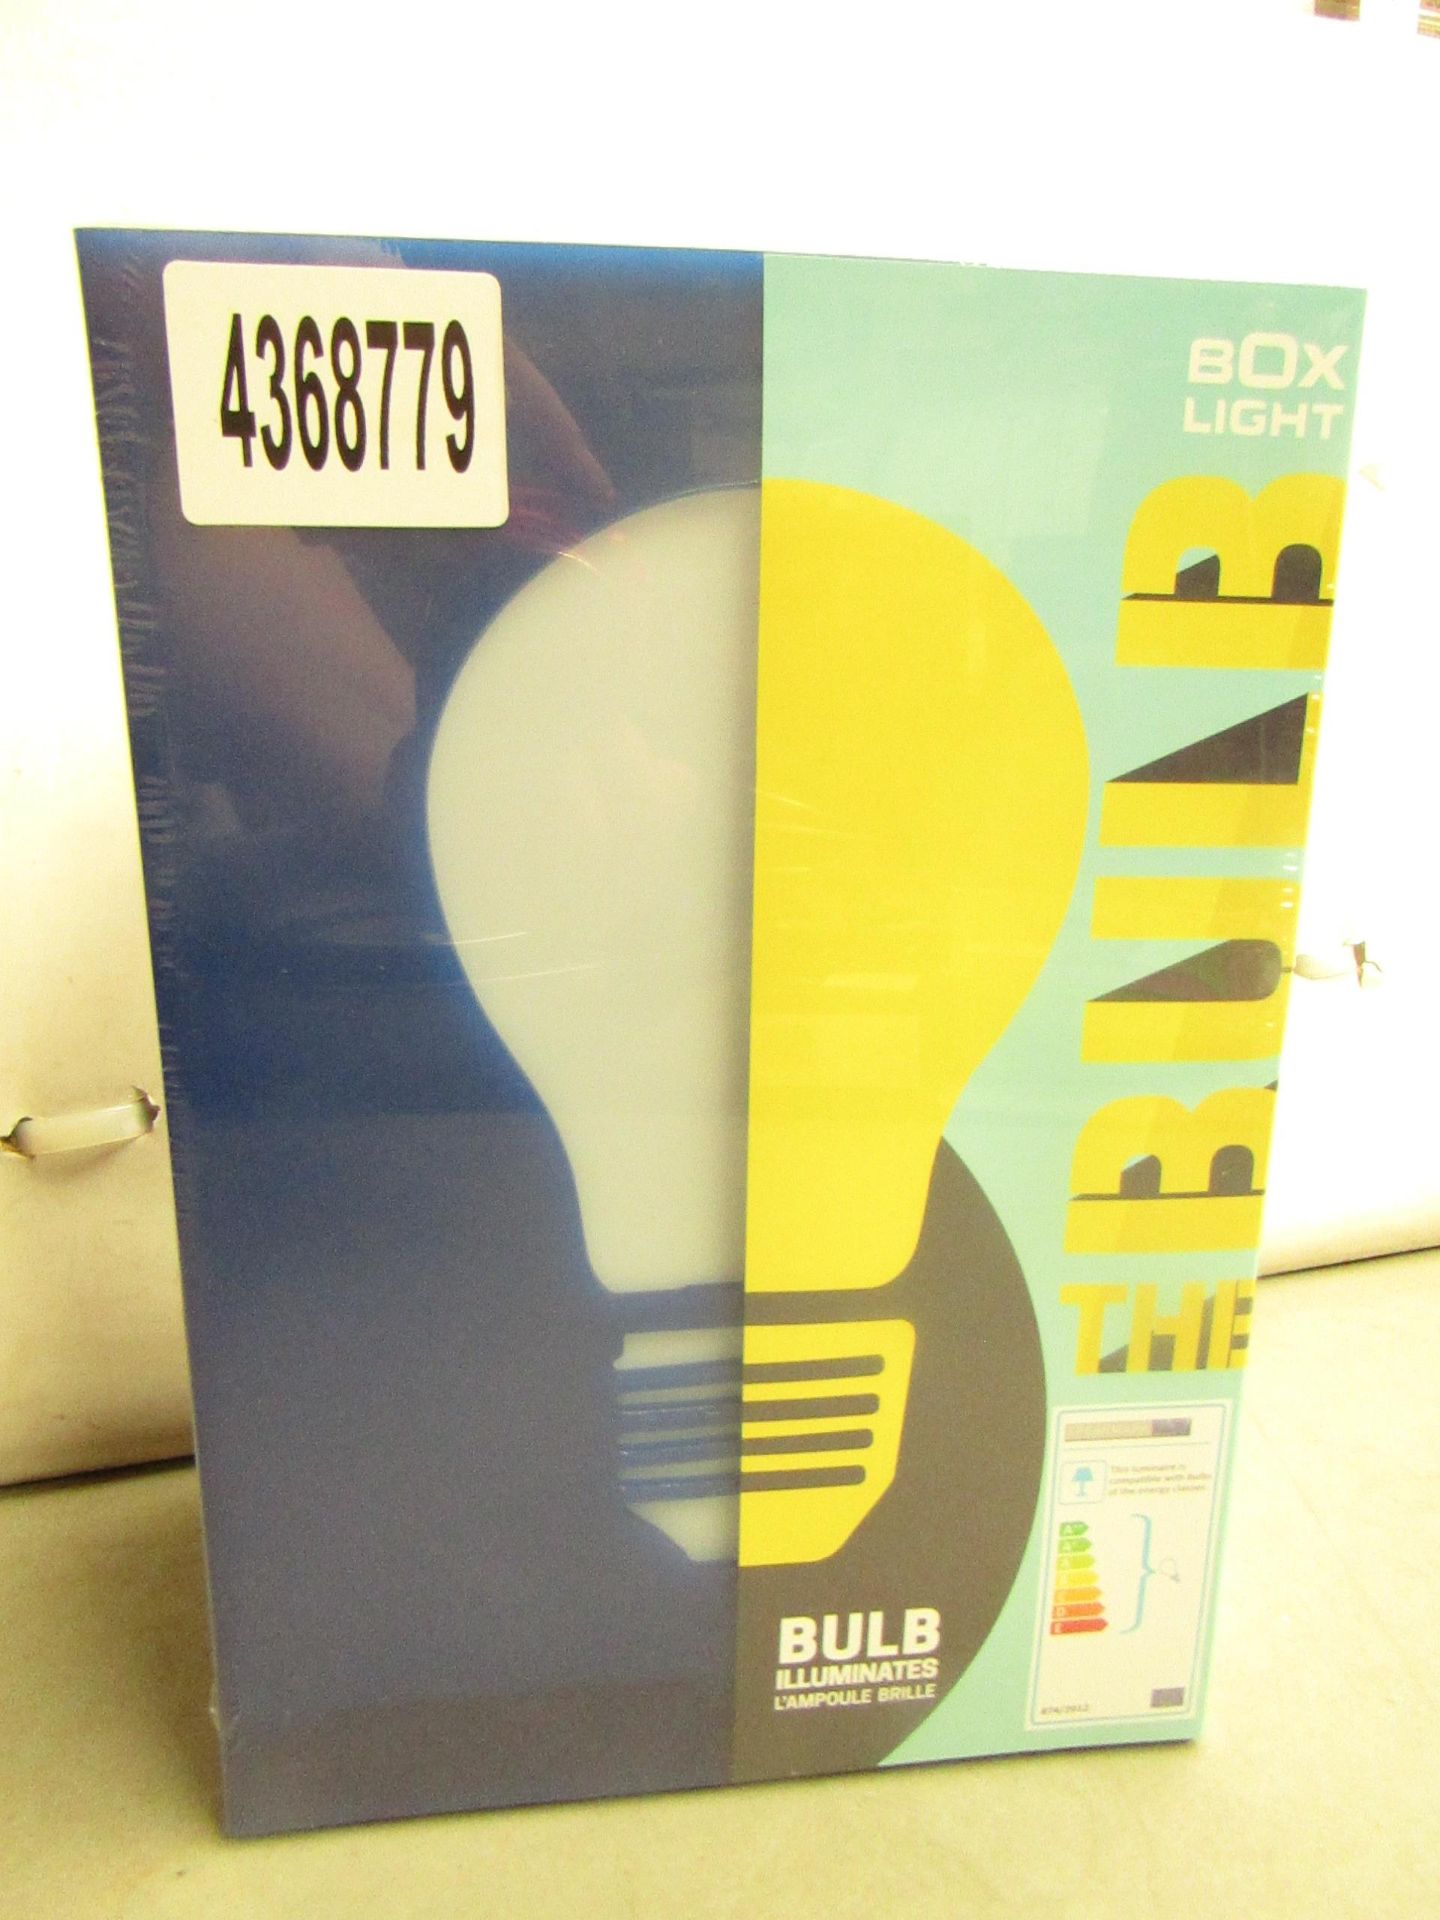 6 x The Bulb Box Lights. New & Boxed